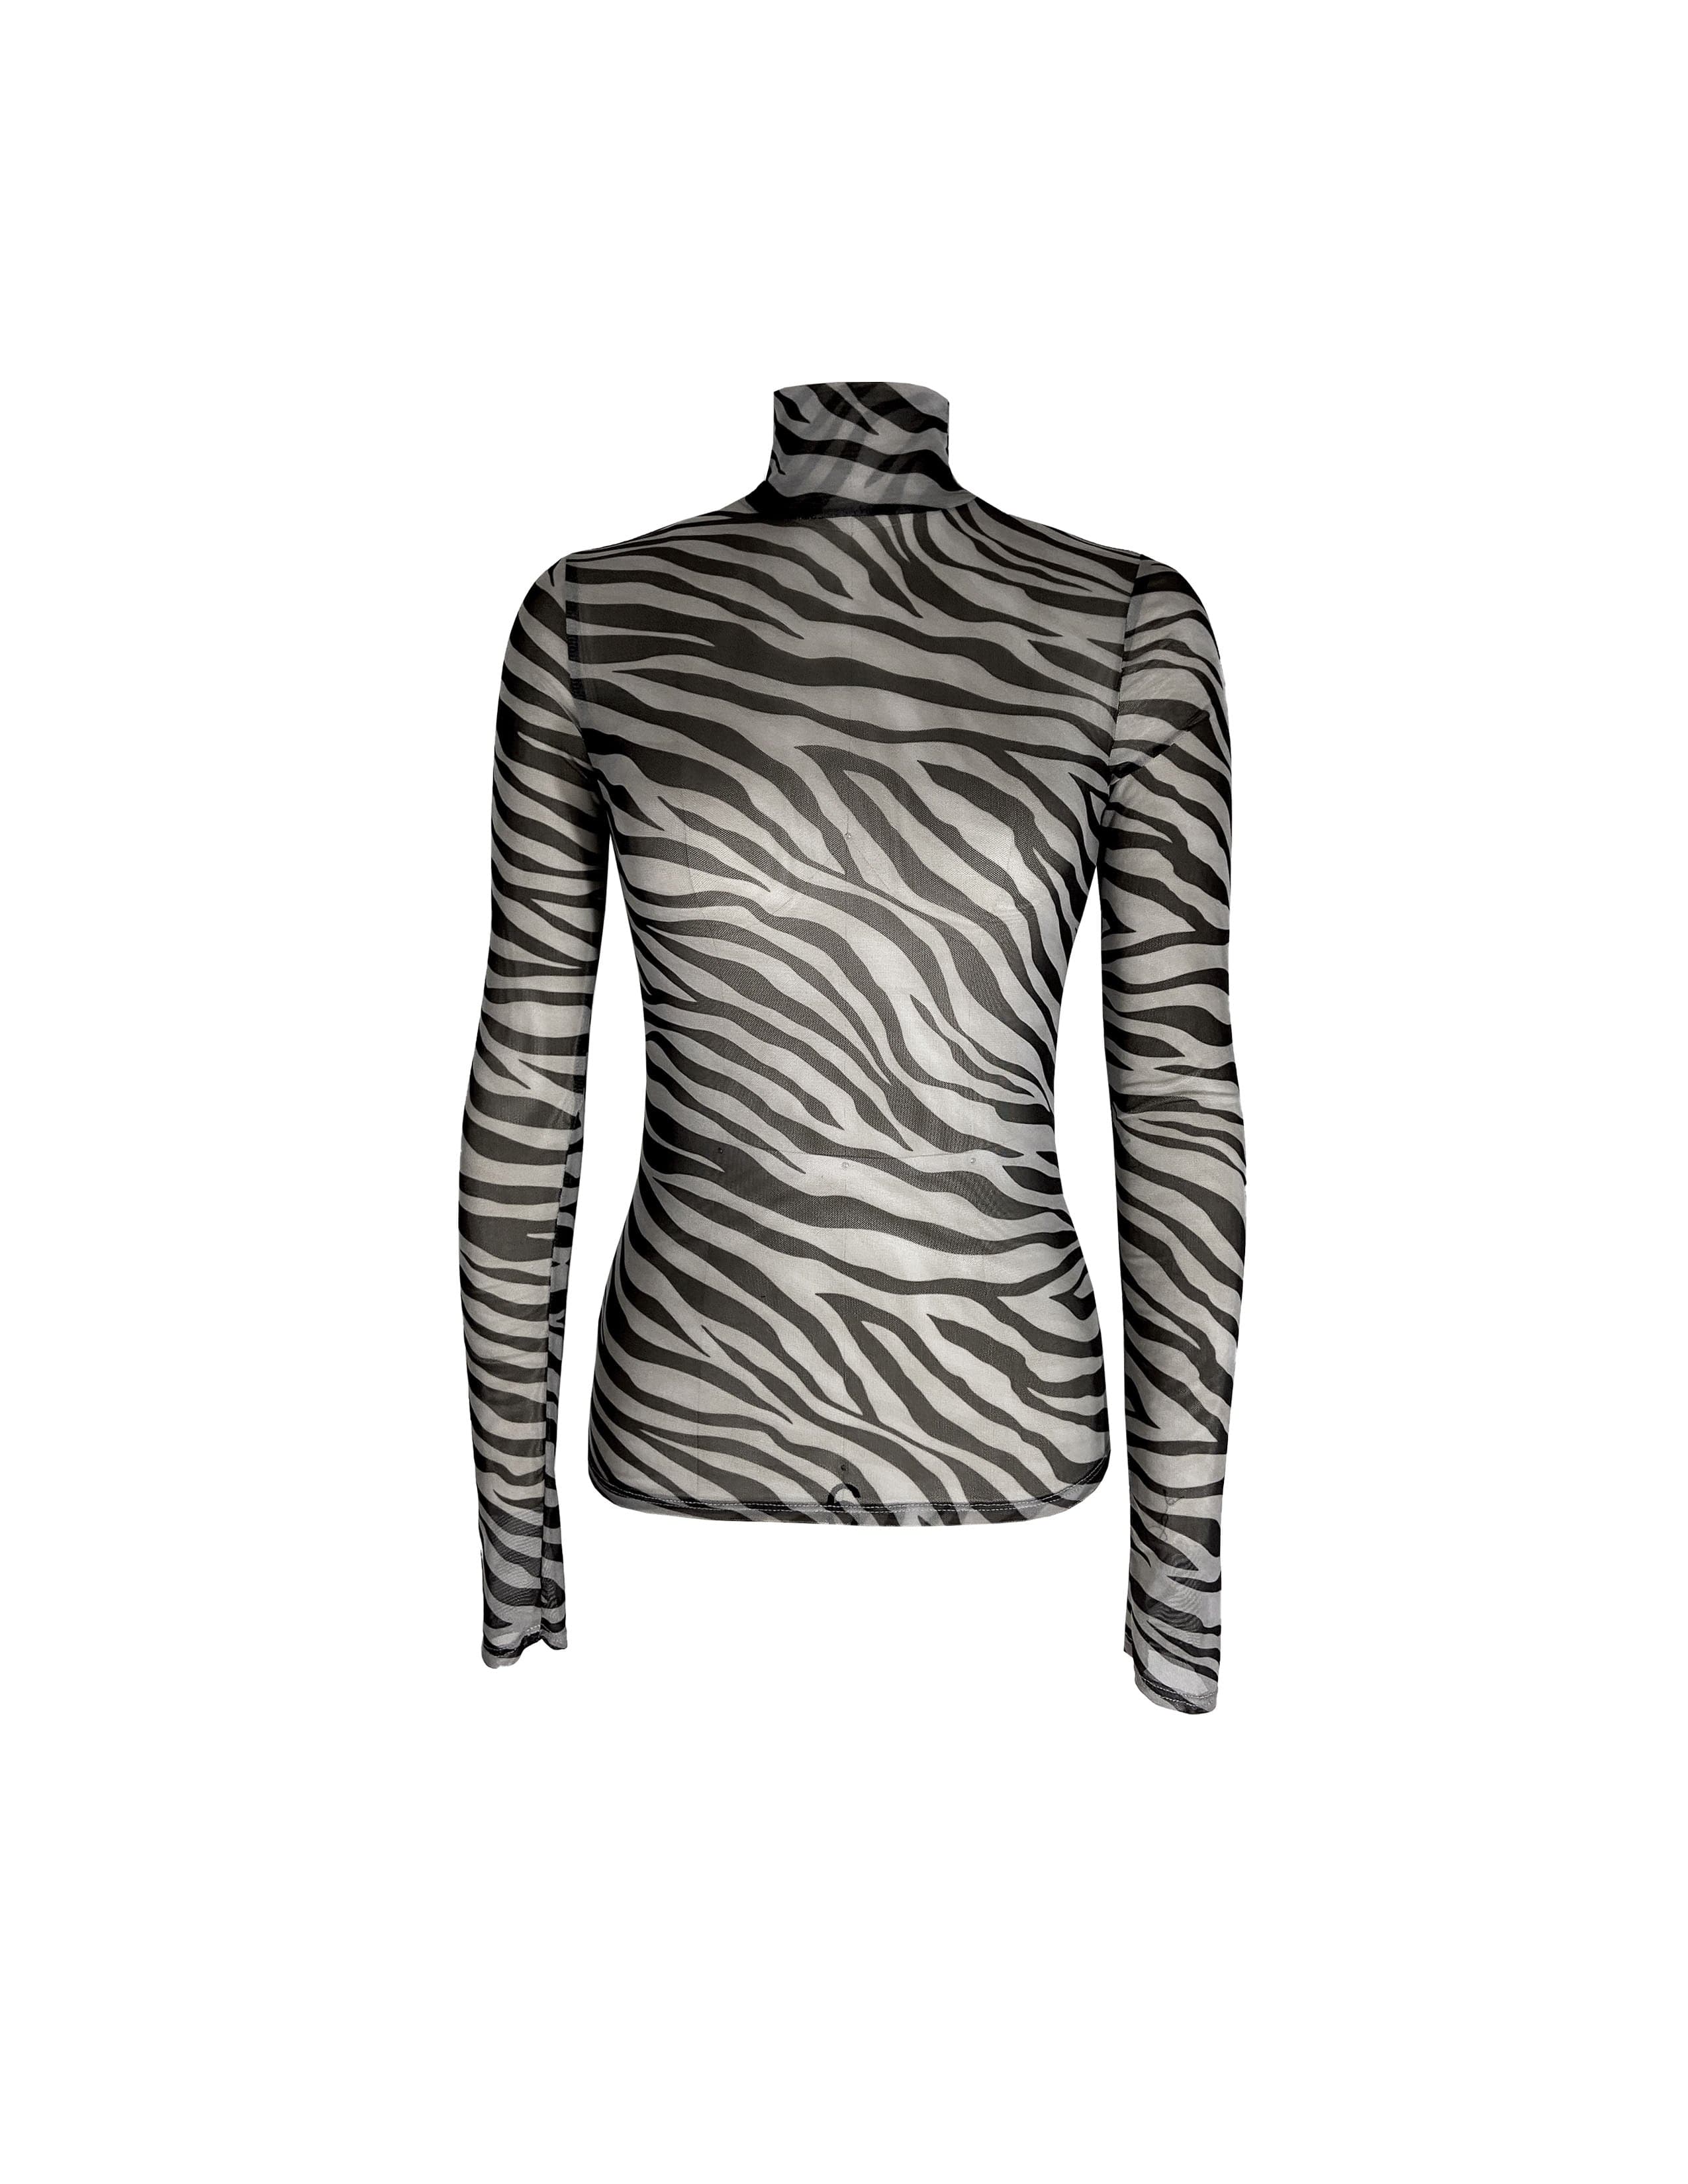 Zebra mesh top